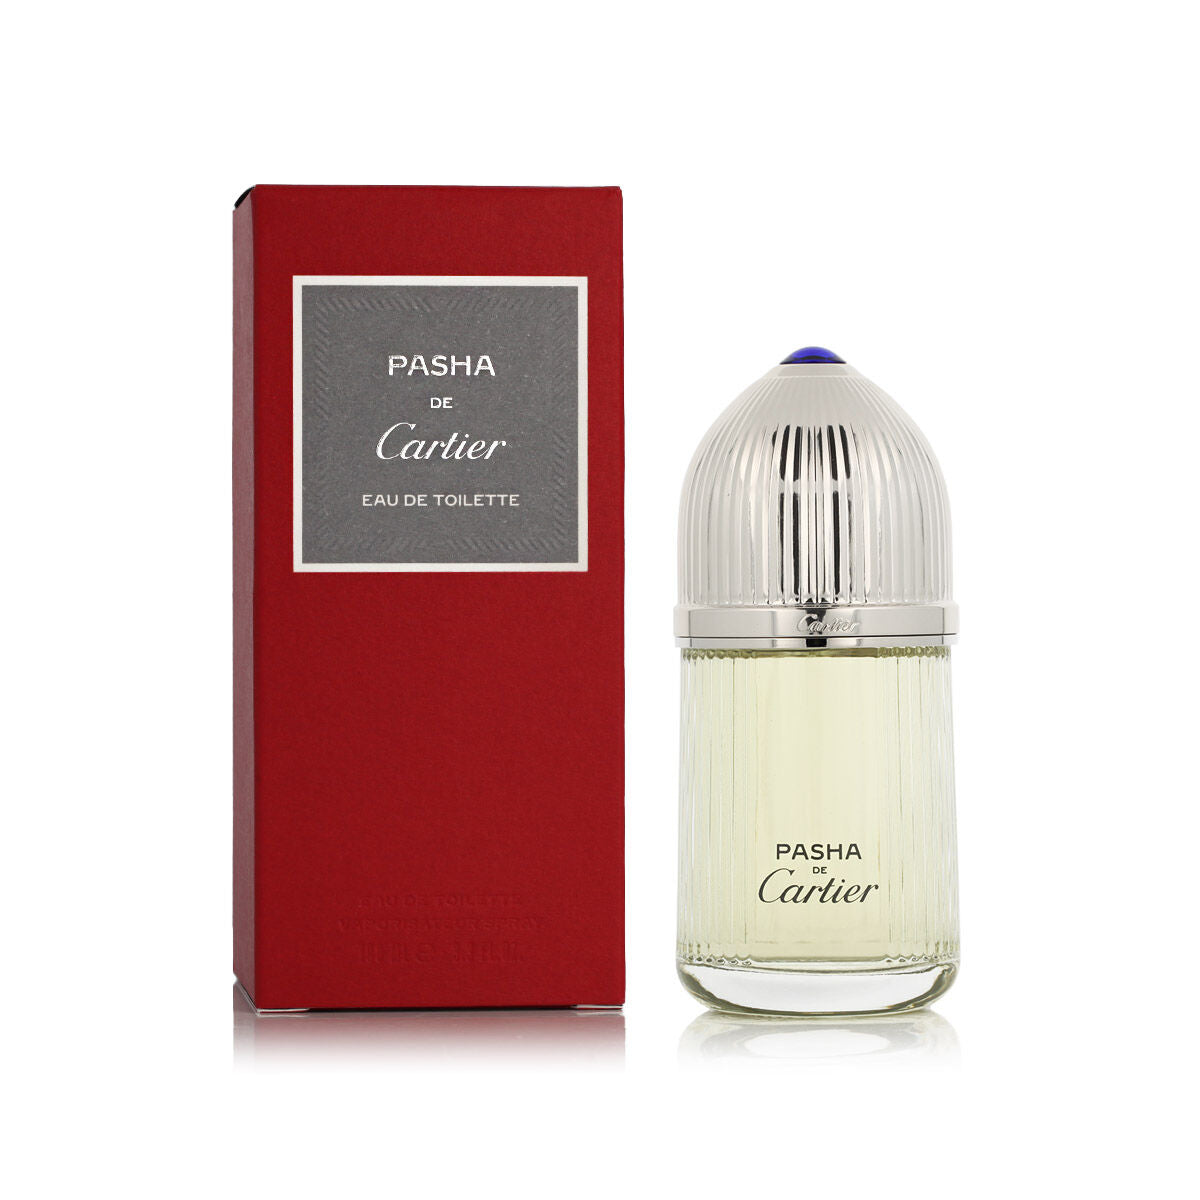 Perfume Men Cartier Edt Pasha de Cartier 100 ml